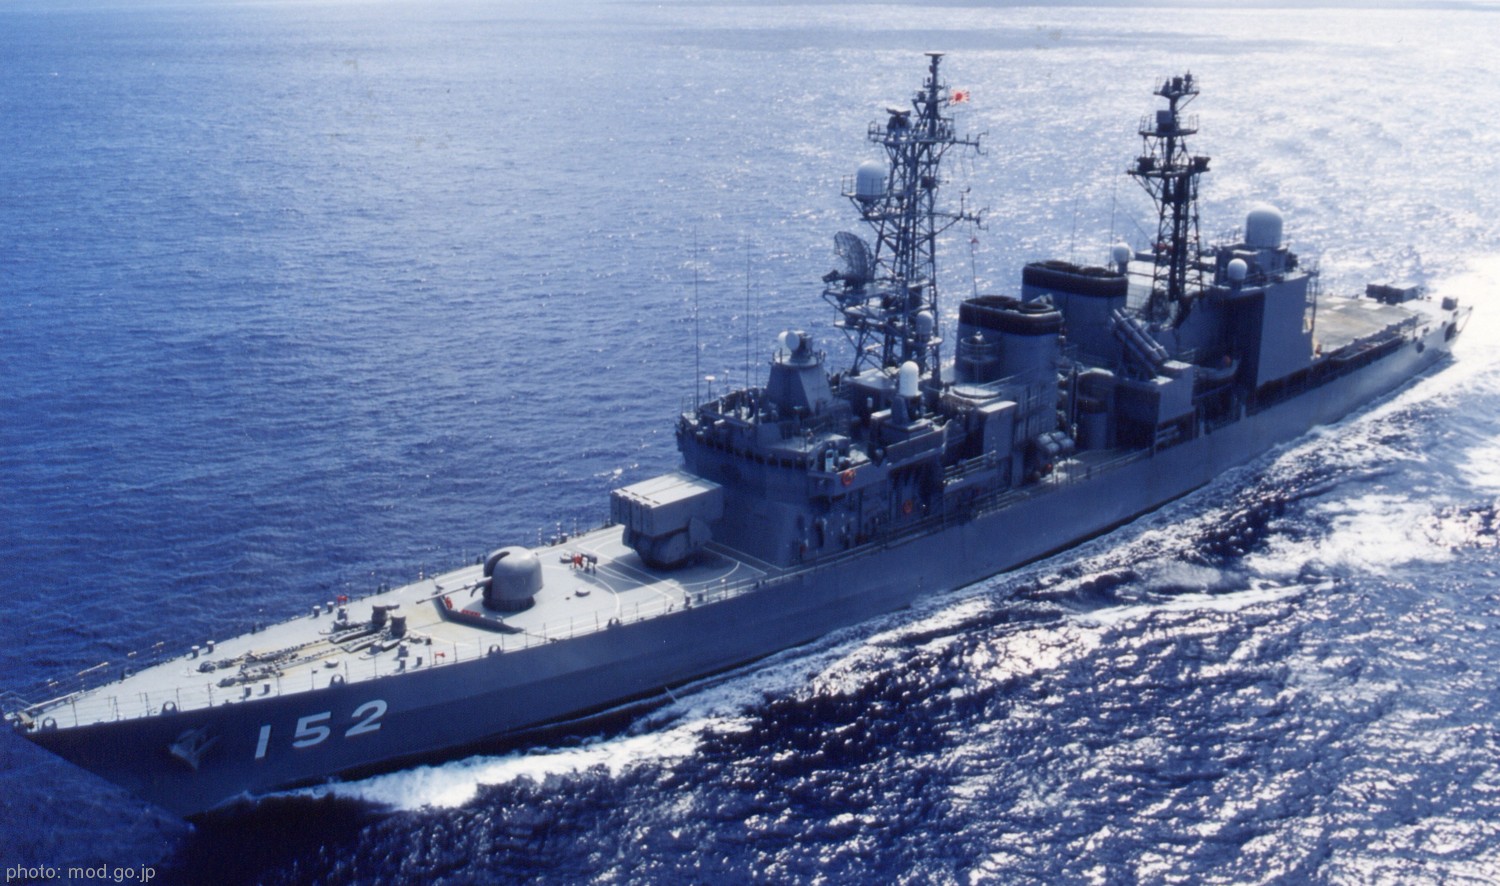 dd-152 js yamagiri asagiri class destroyer japan maritime self defense force jmsdf 11